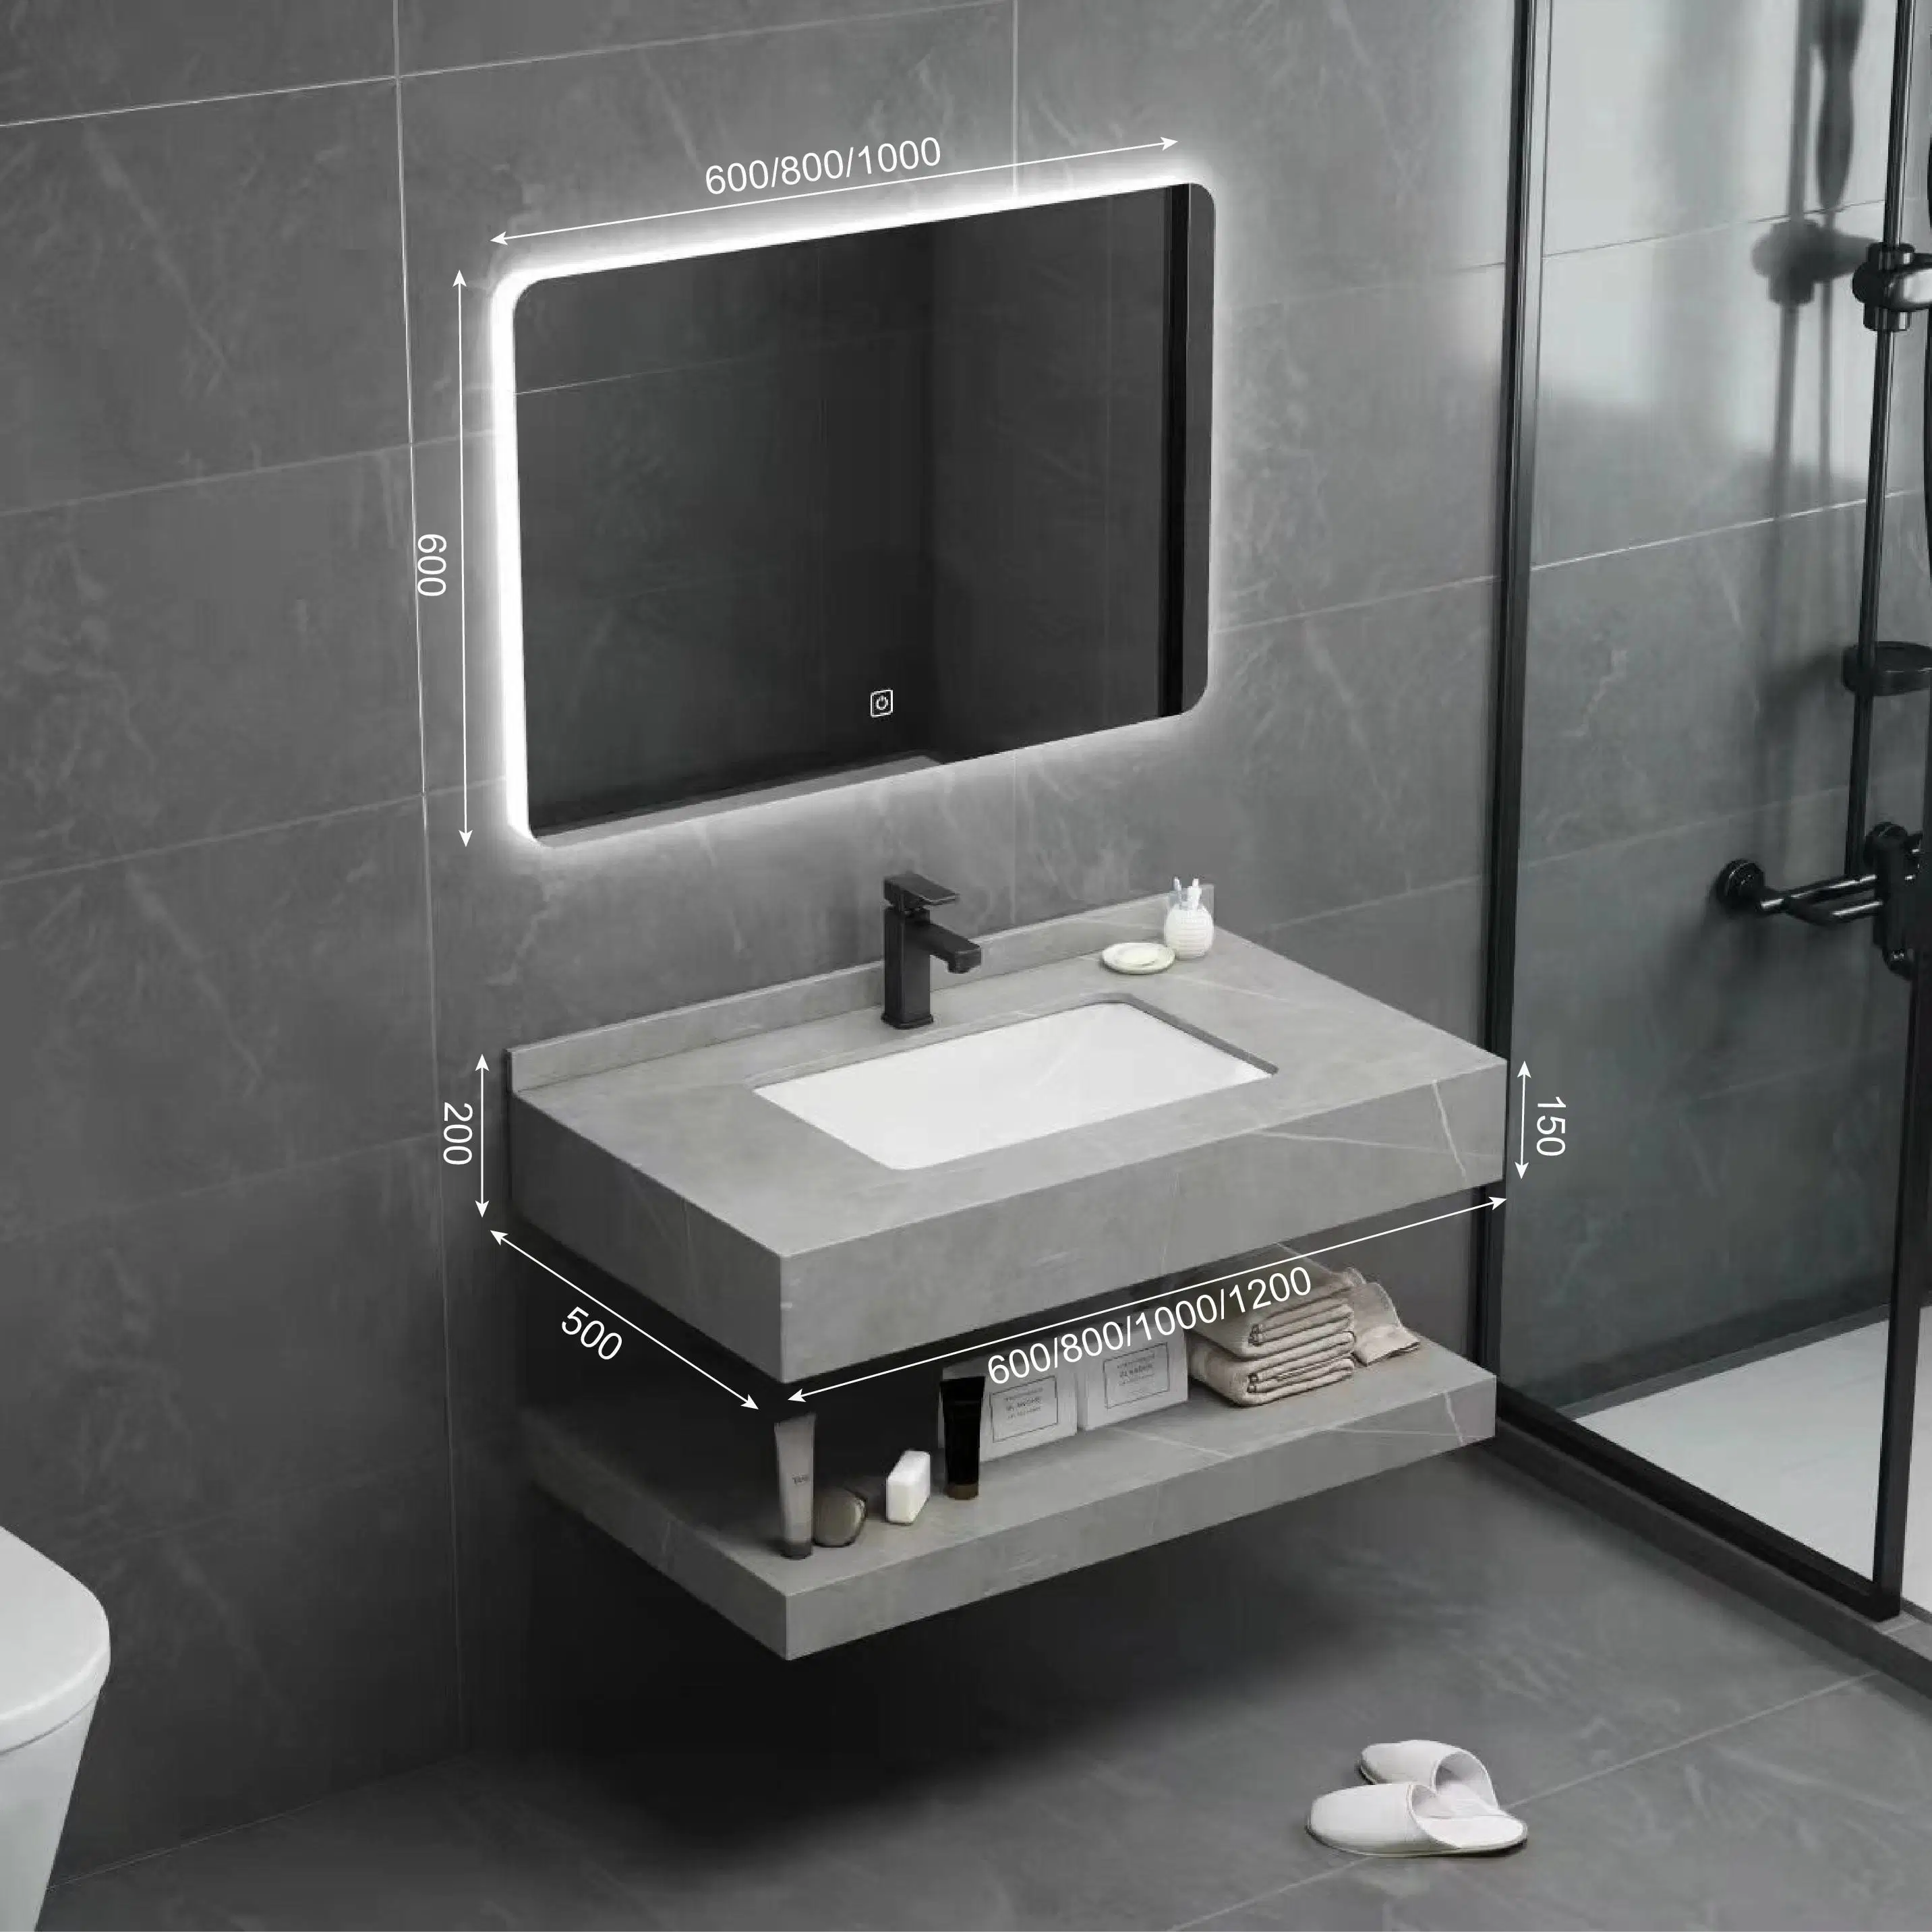 Современные шкафы для ванной комнаты с зеркальной мебелью Luxury Brown Набор туалетов для ванны Штеред Камень мраморный ванти